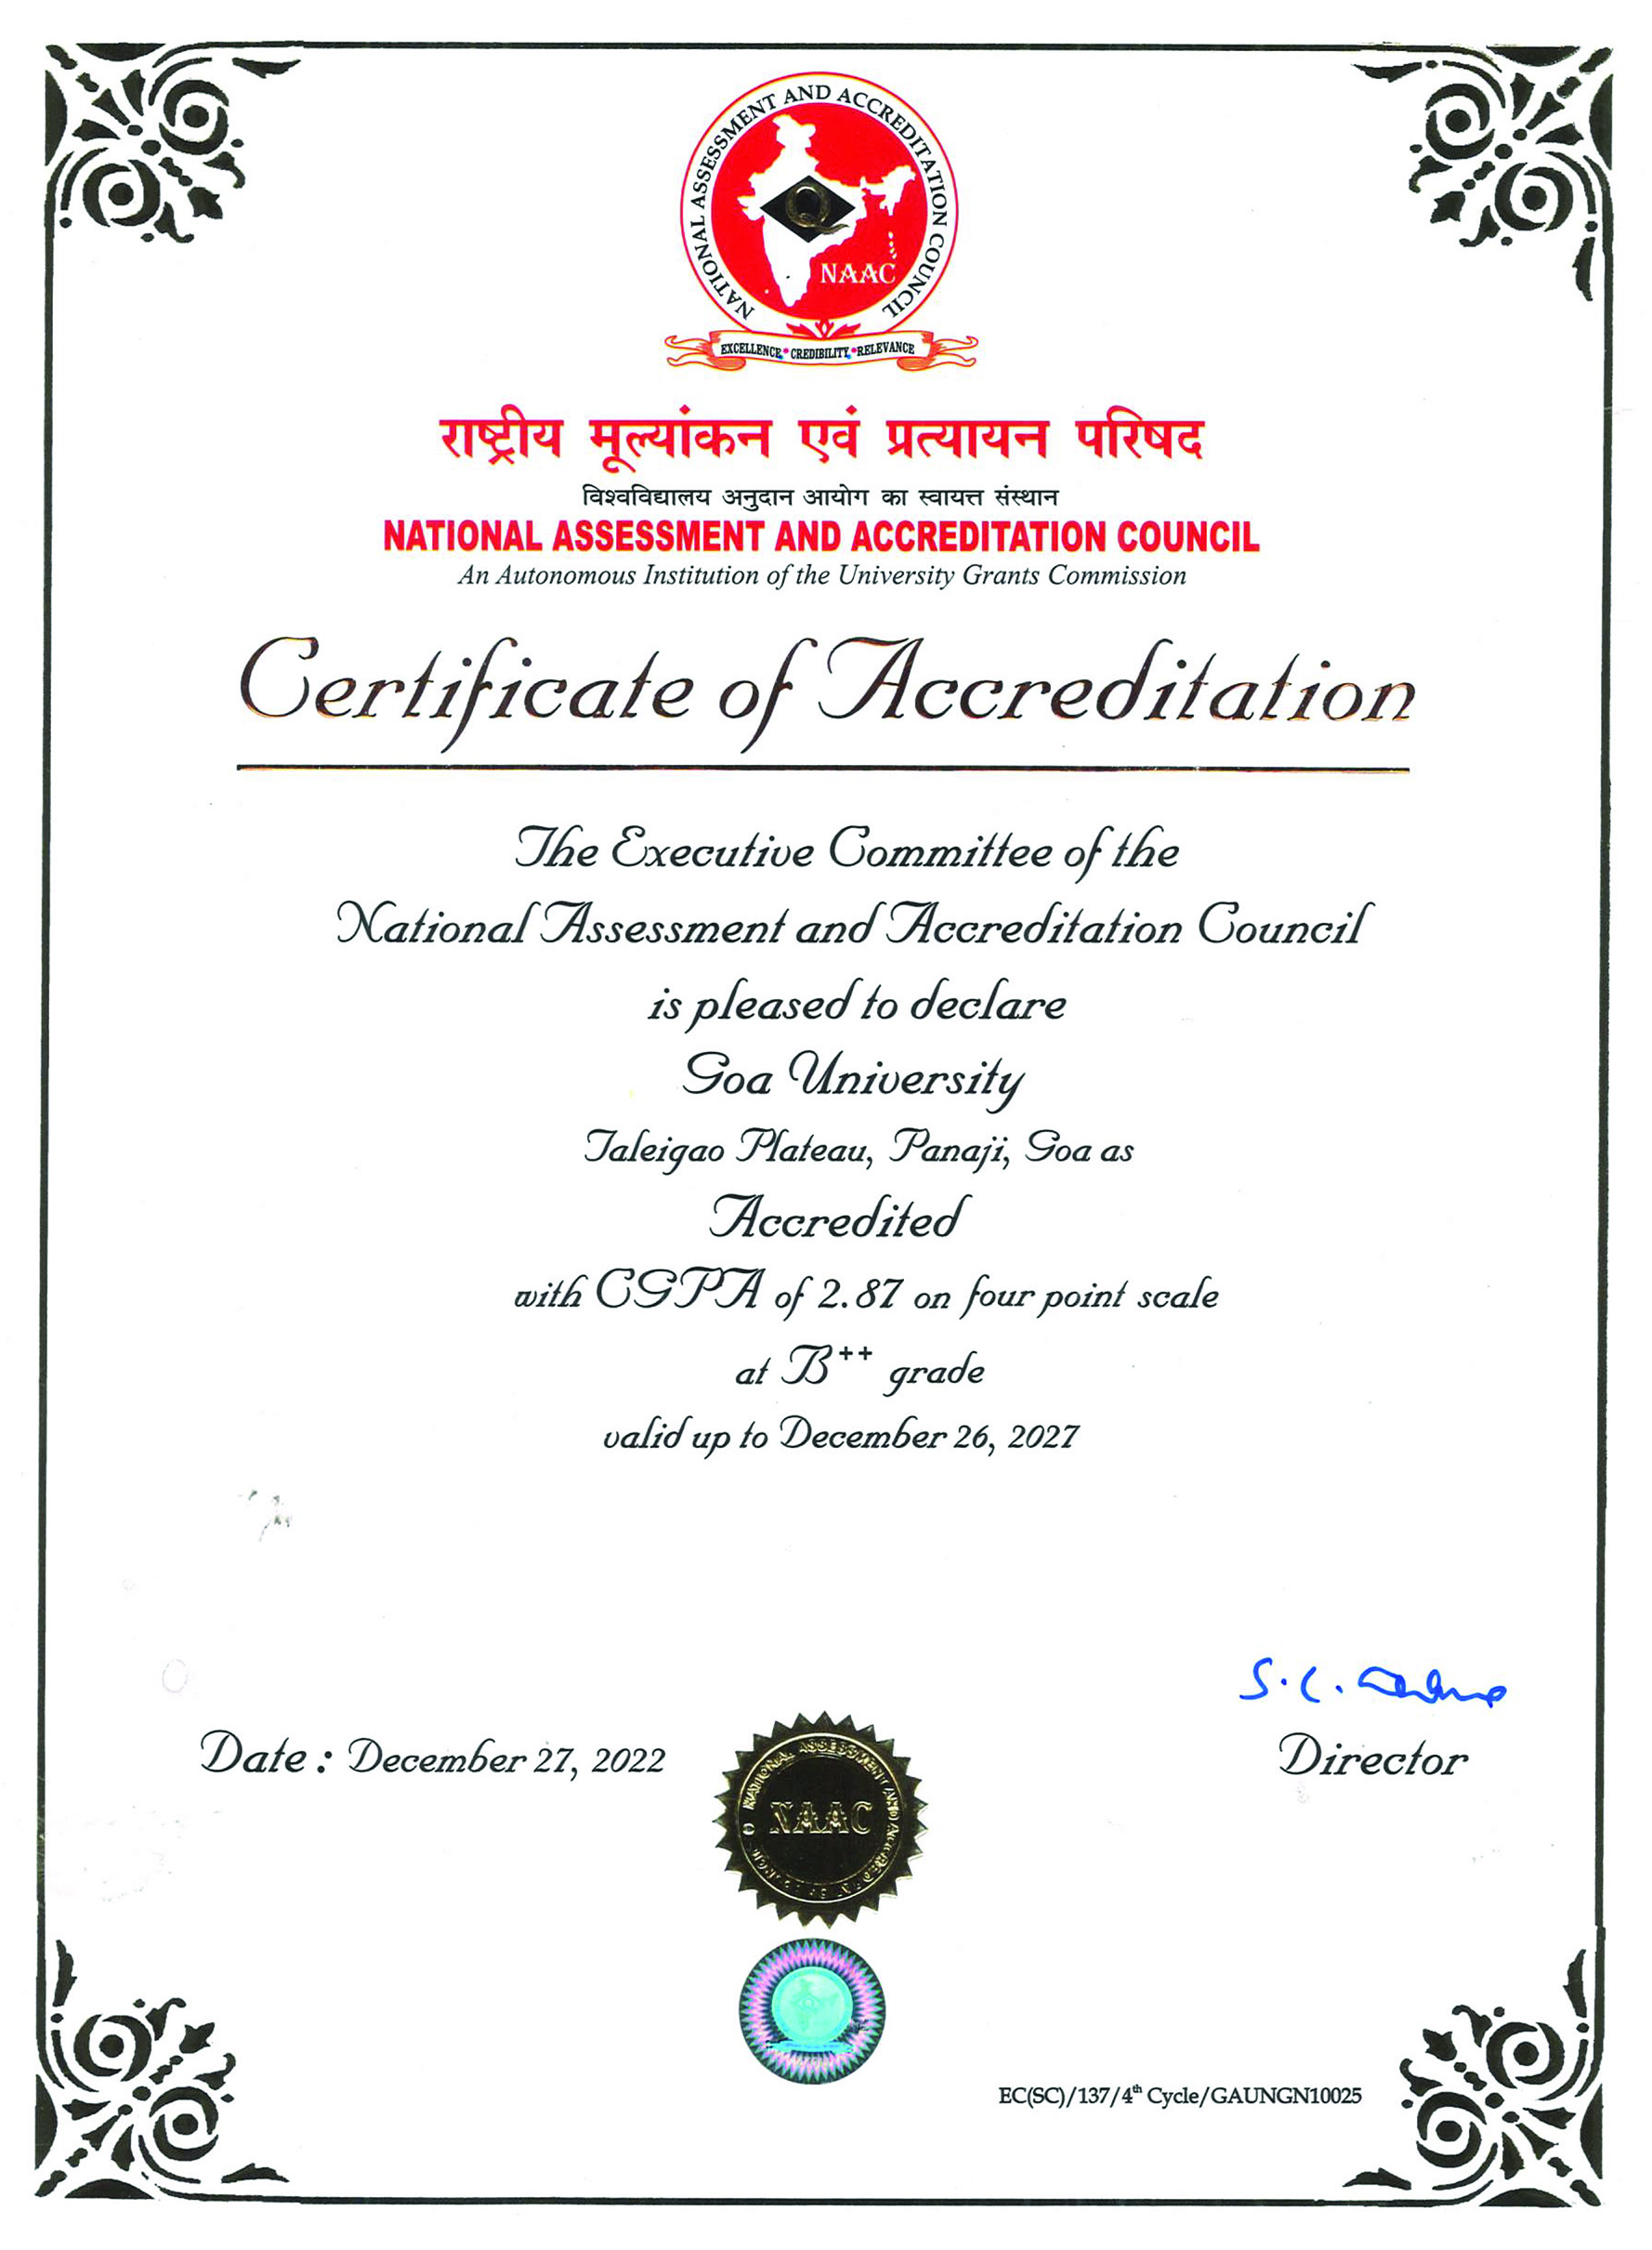 NAAC Certificate